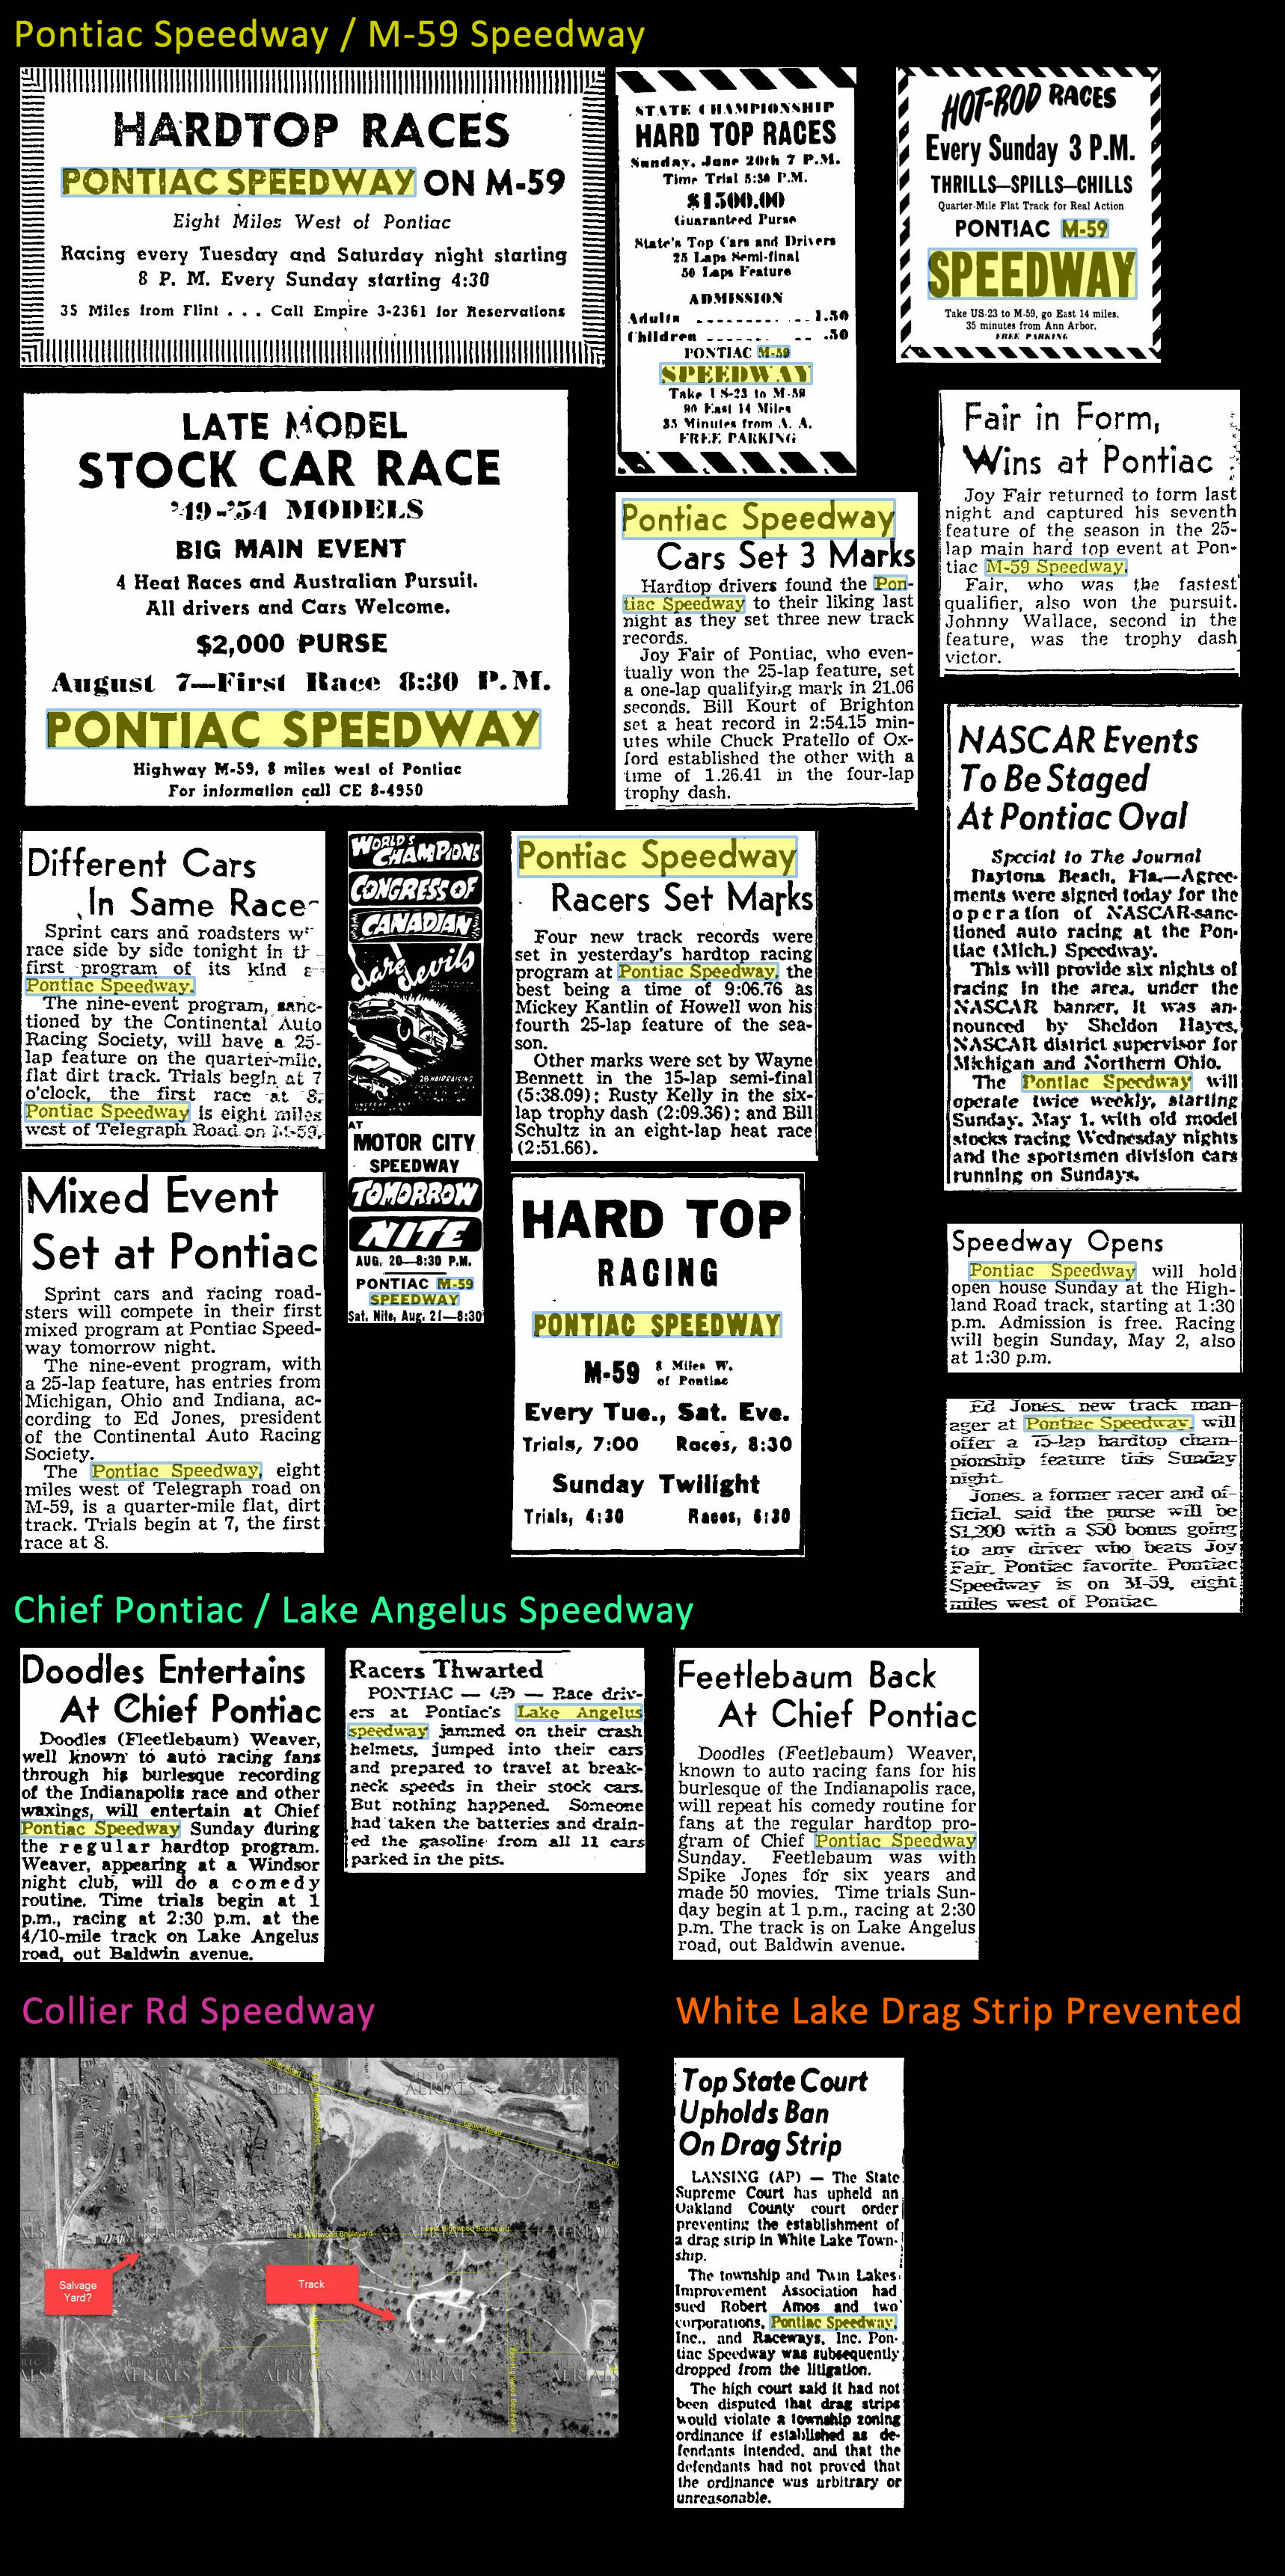 Pontiac Speedway (M-59 Speedway) - 1953-1955 Ads For Oak County Speedways